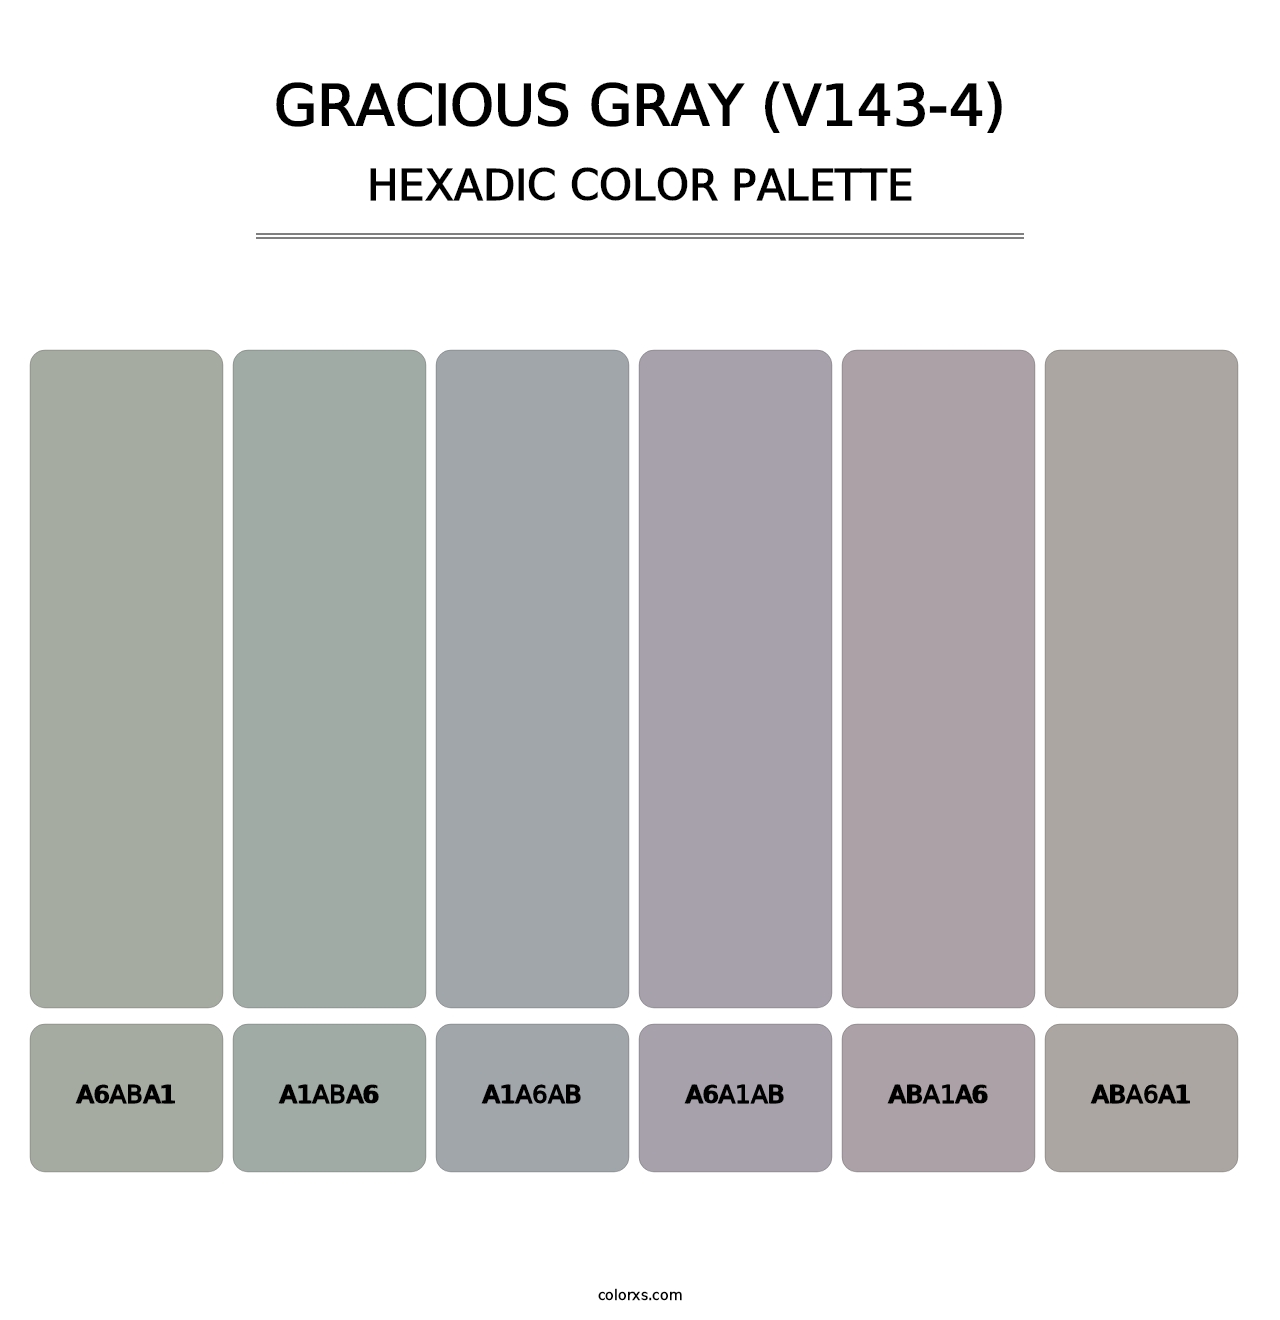 Gracious Gray (V143-4) - Hexadic Color Palette